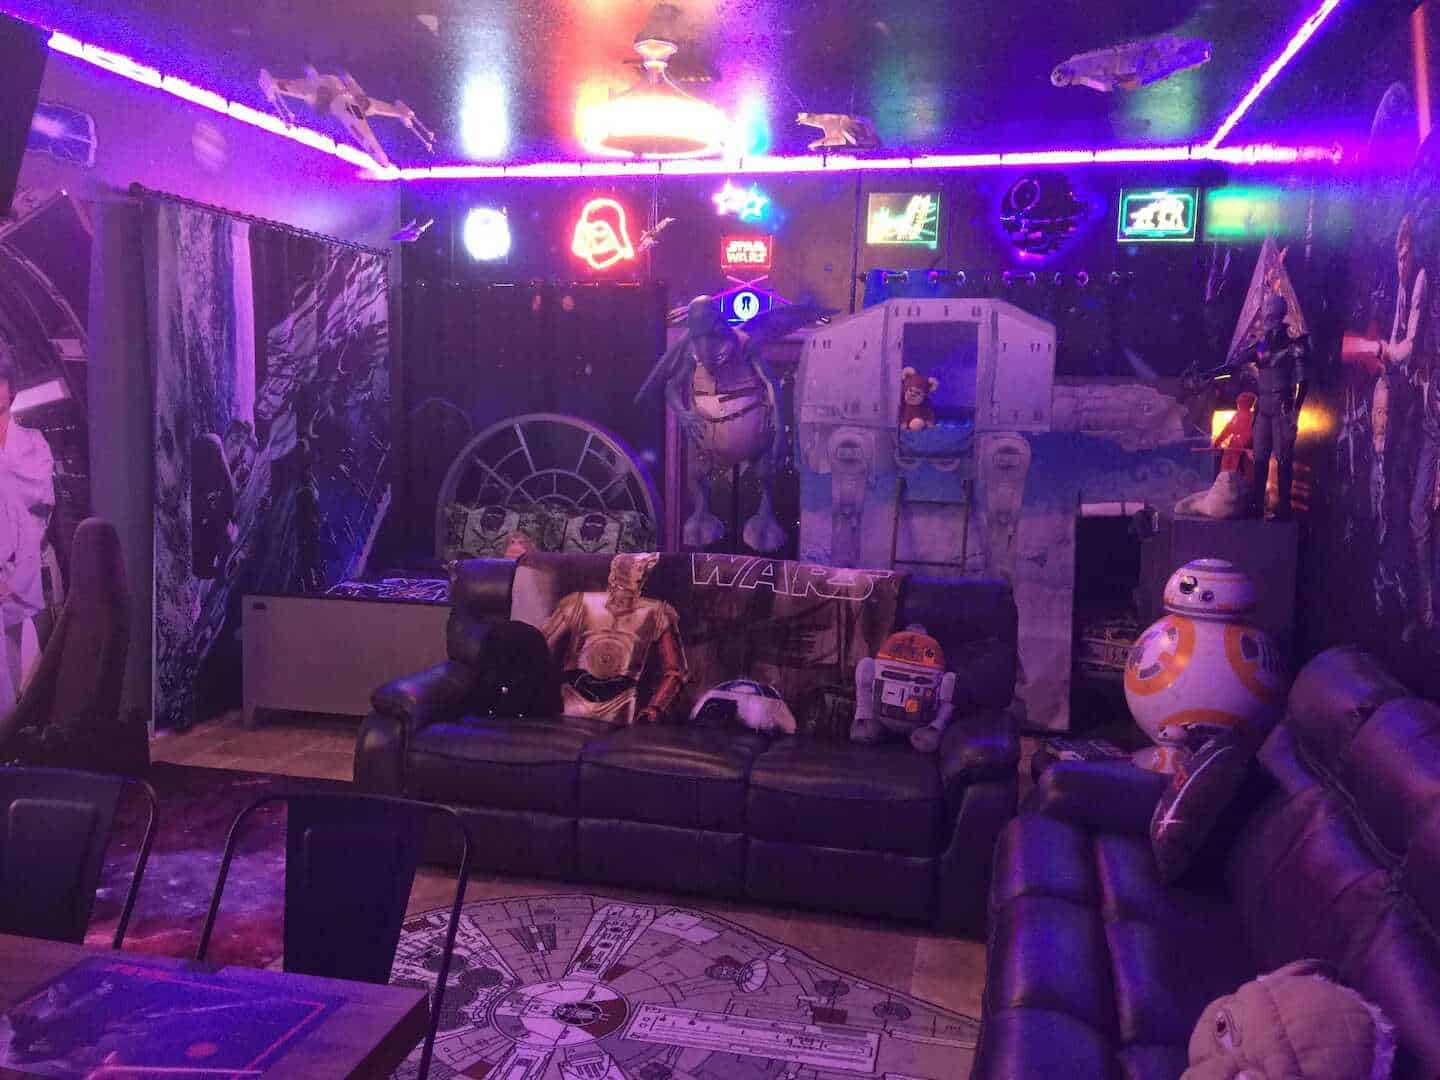 Image of Airbnb rental in Star Wars